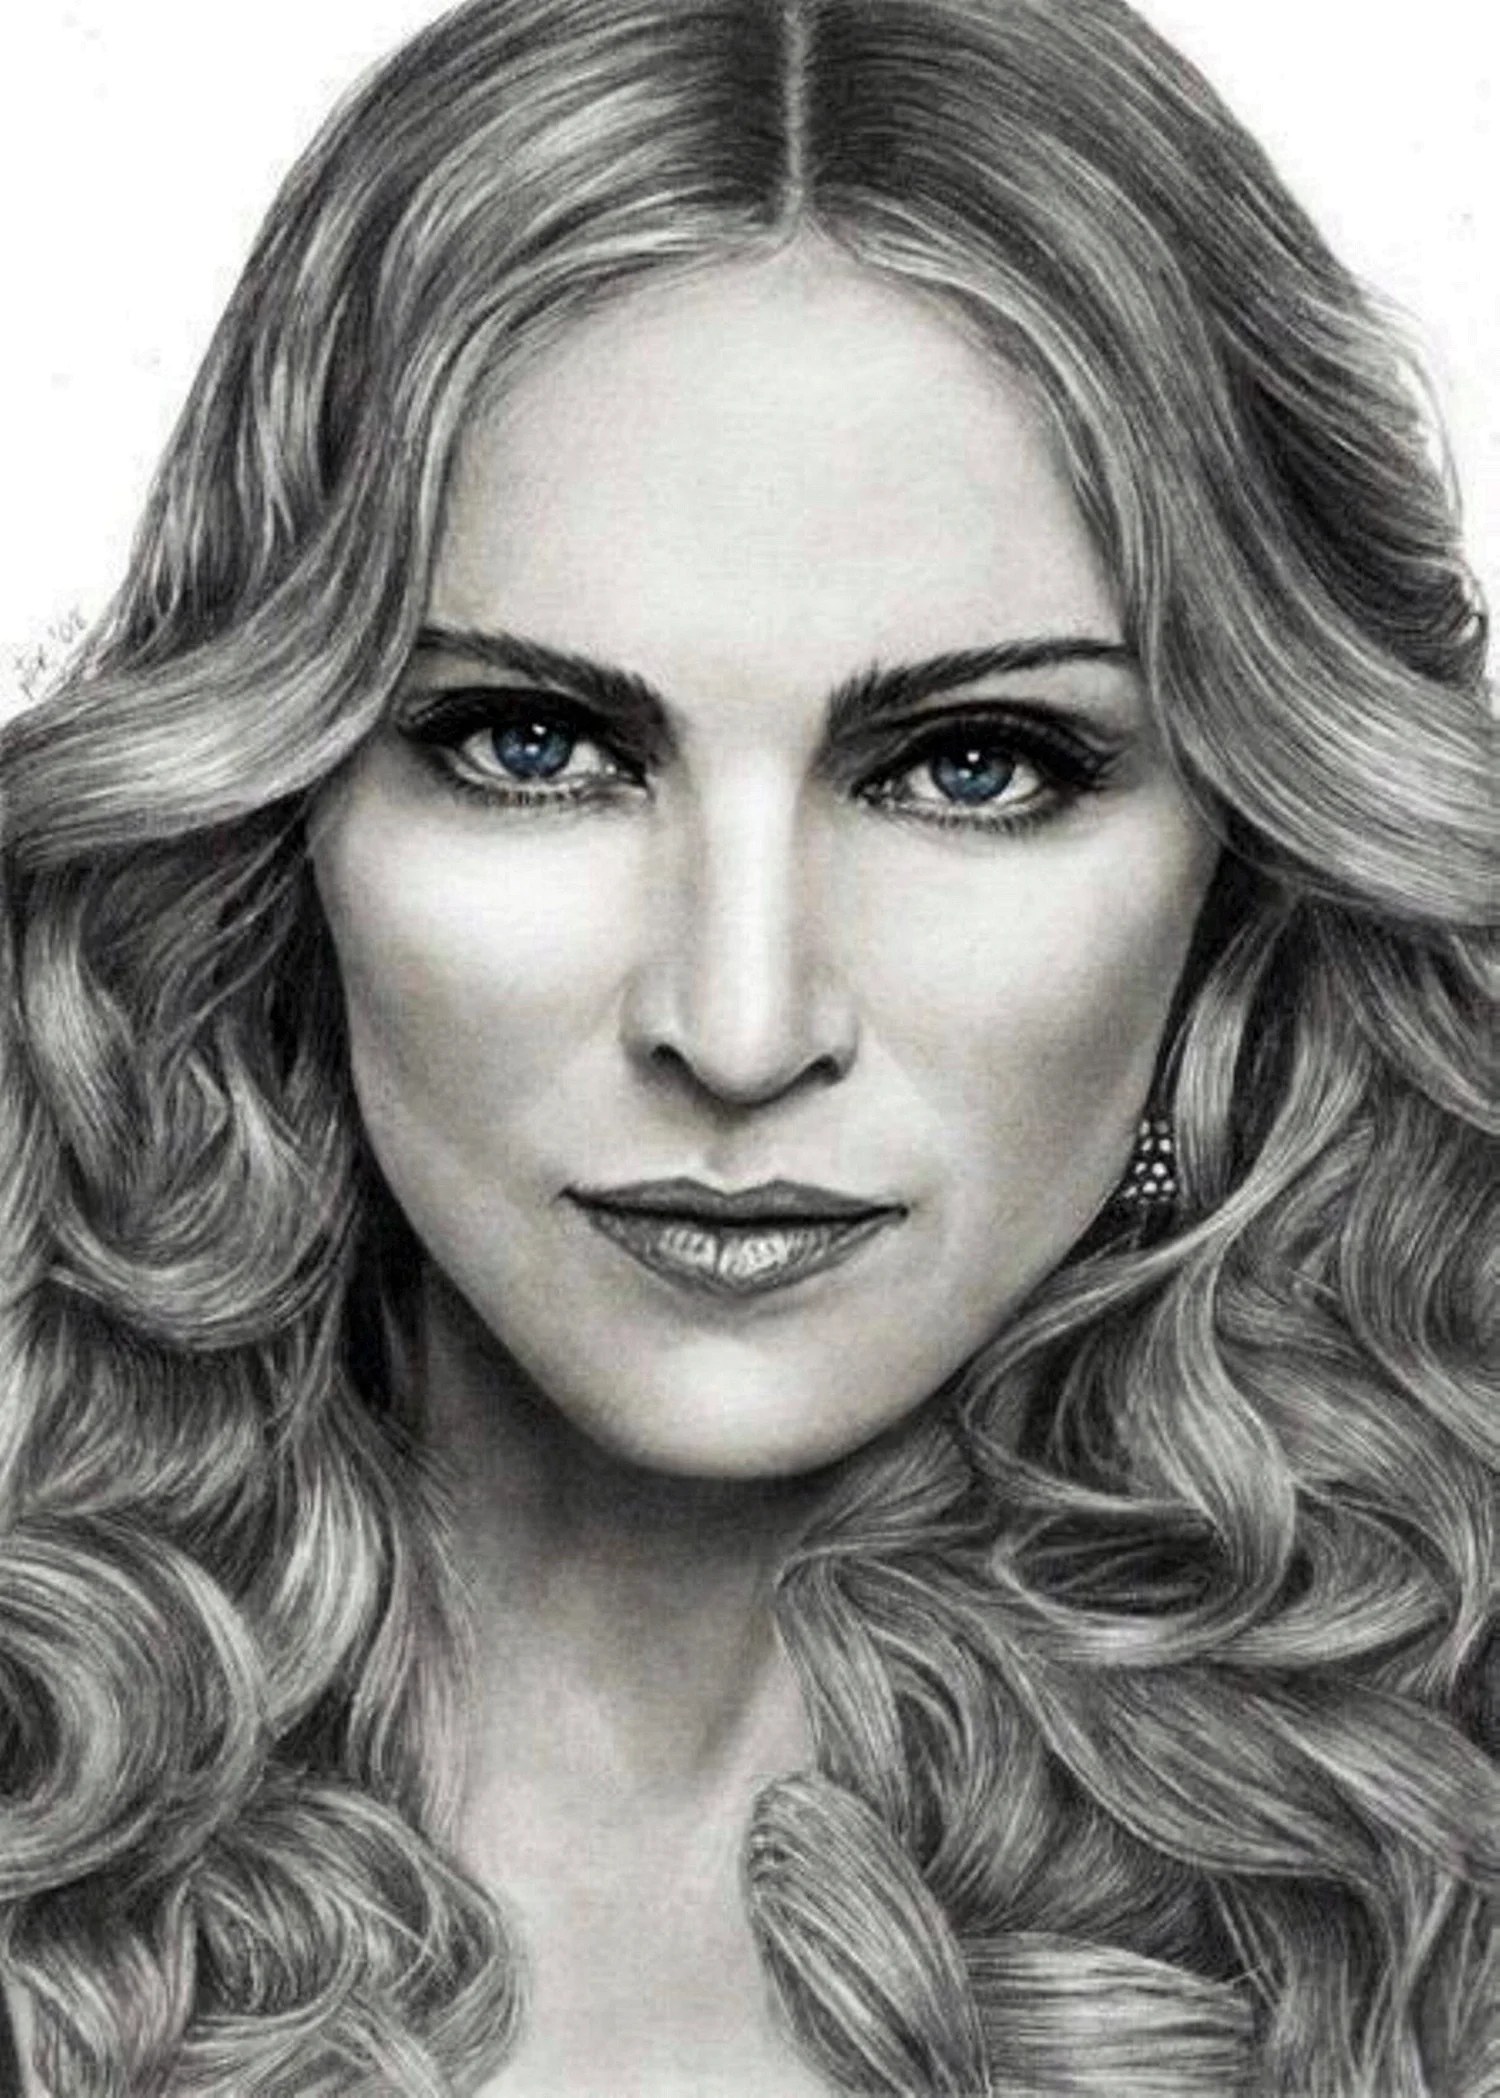 Мадонна портрет певица